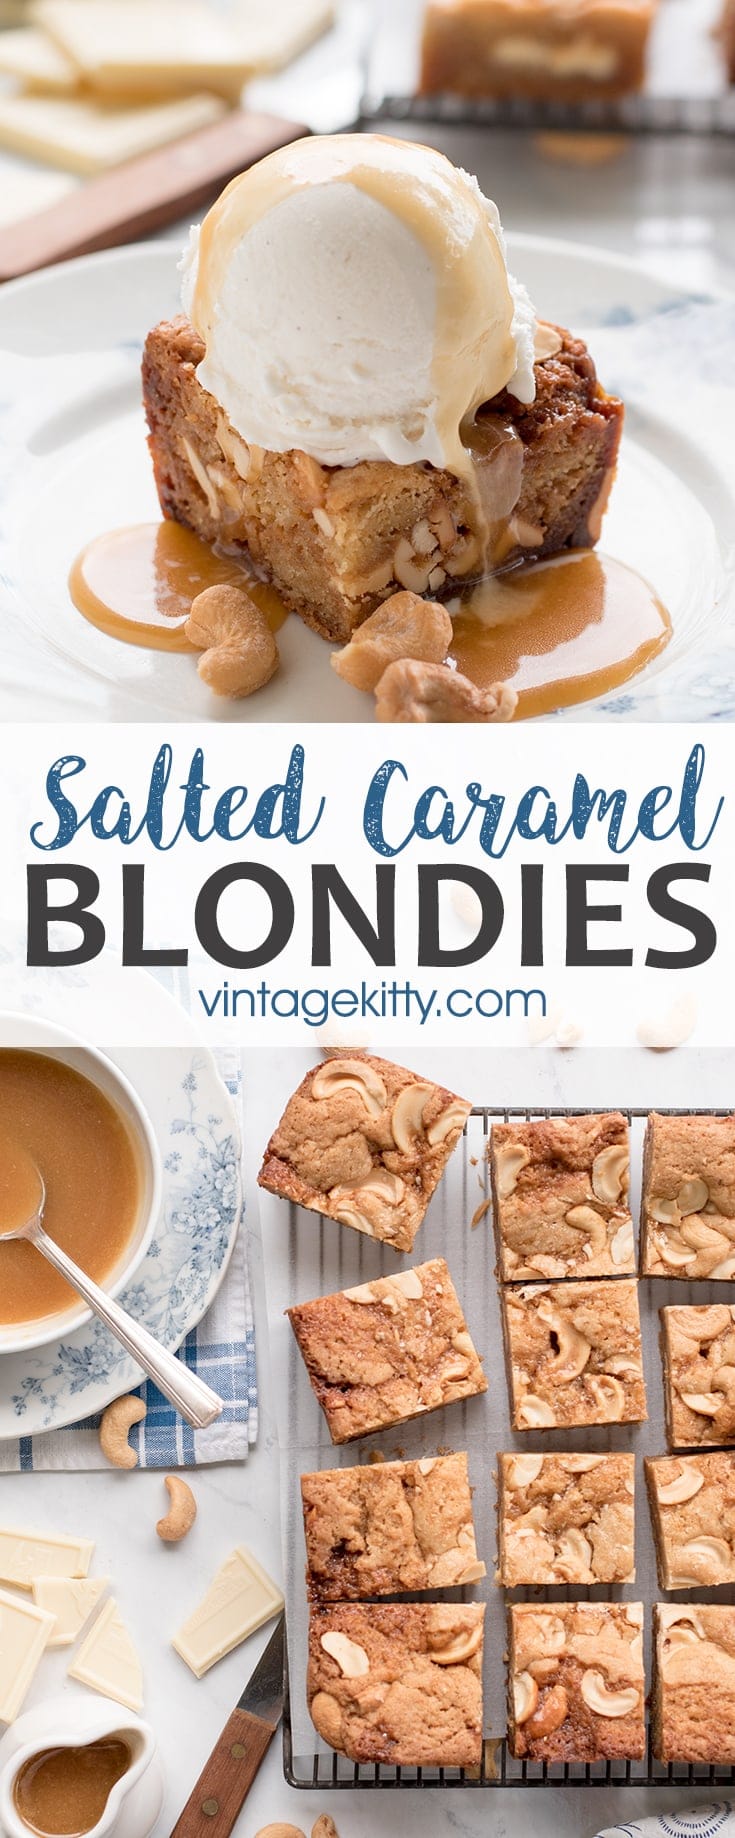 Caramel Blondies Pin 2 - Salted Caramel Blondies with White Chocolate and Cashews